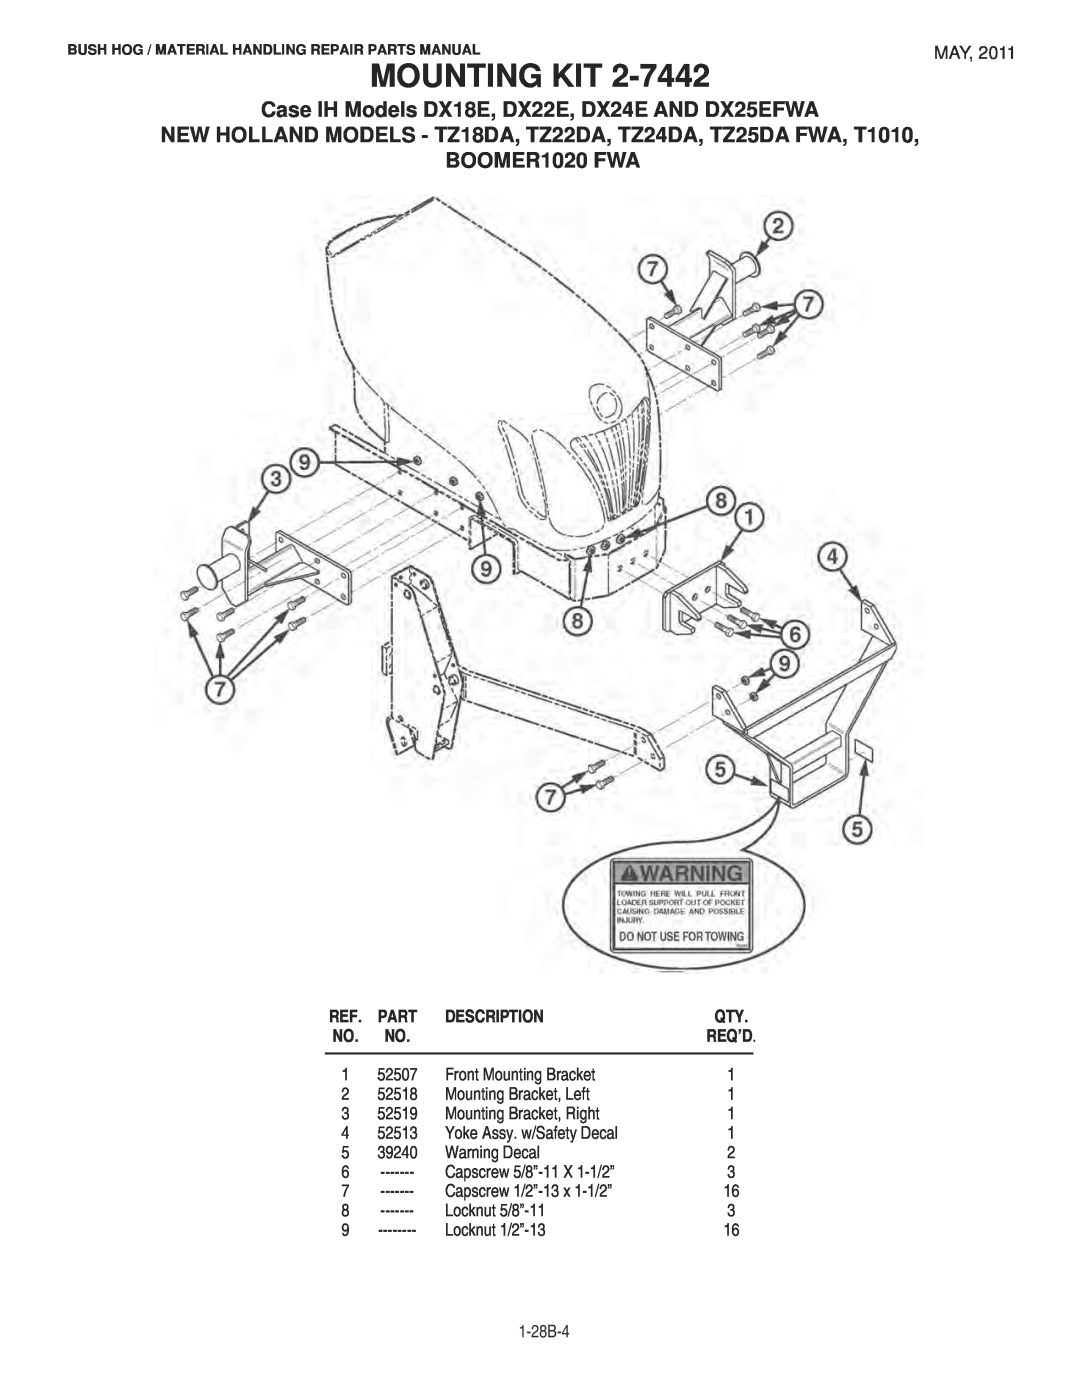 Bush Hog 1747 manual Case IH Models DX18E, DX22E, DX24E AND DX25EFWA, BOOMER1020 FWA, Mounting Kit, Description 